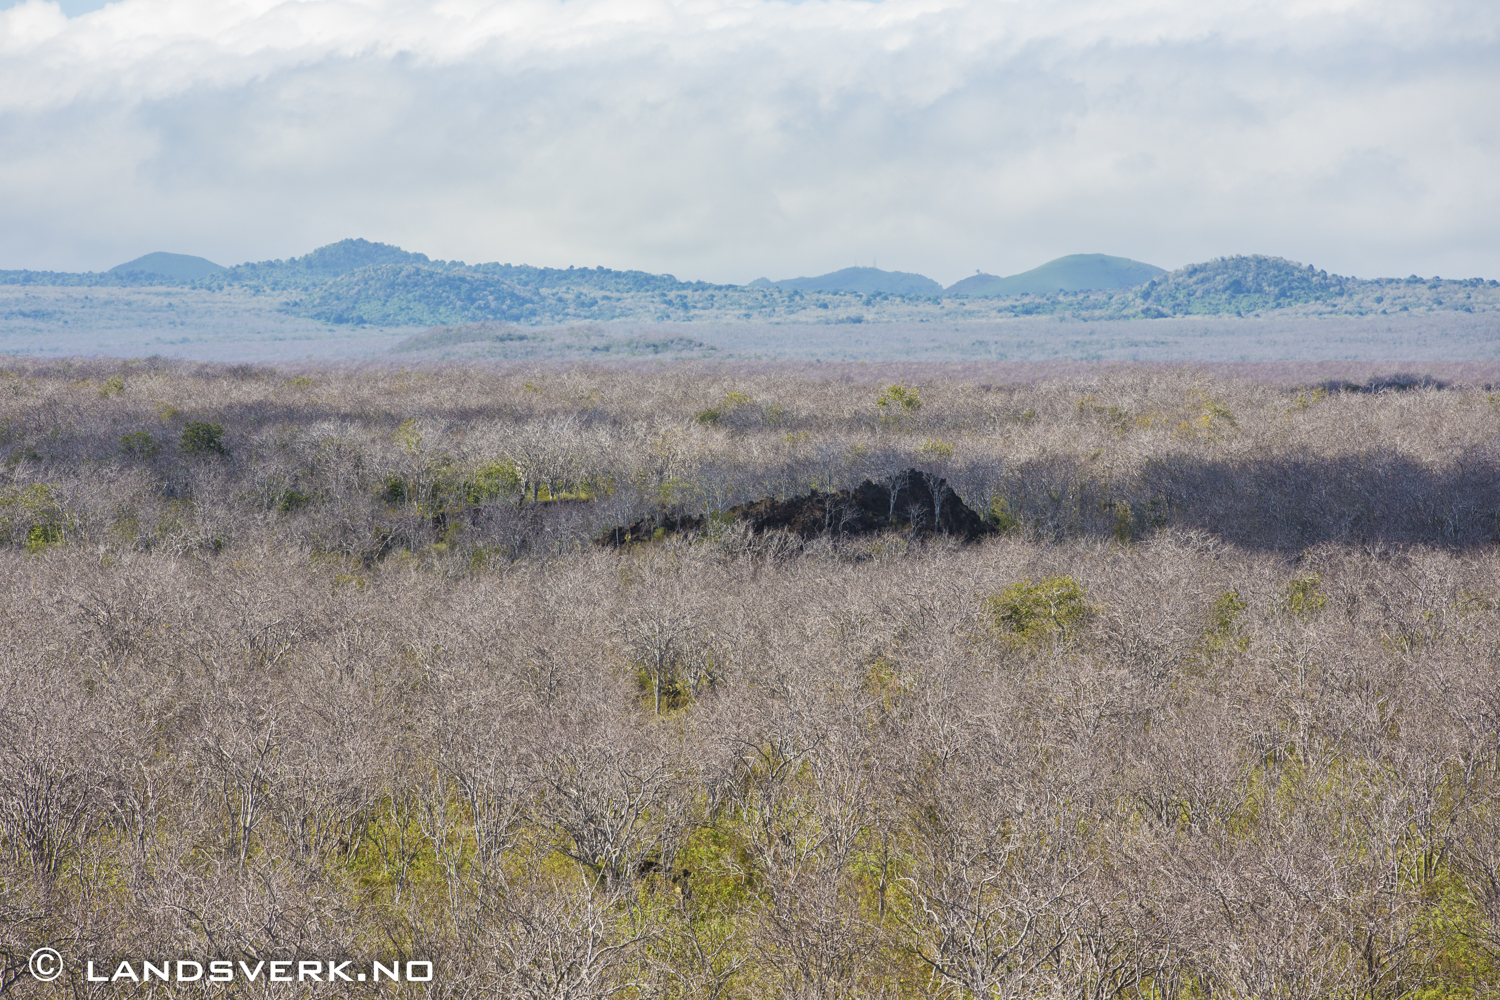 Cerro Dragon, Galapagos. Dryyy. 

(Canon EOS 5D Mark III / Canon EF 70-200mm f/2.8 L IS II USM)